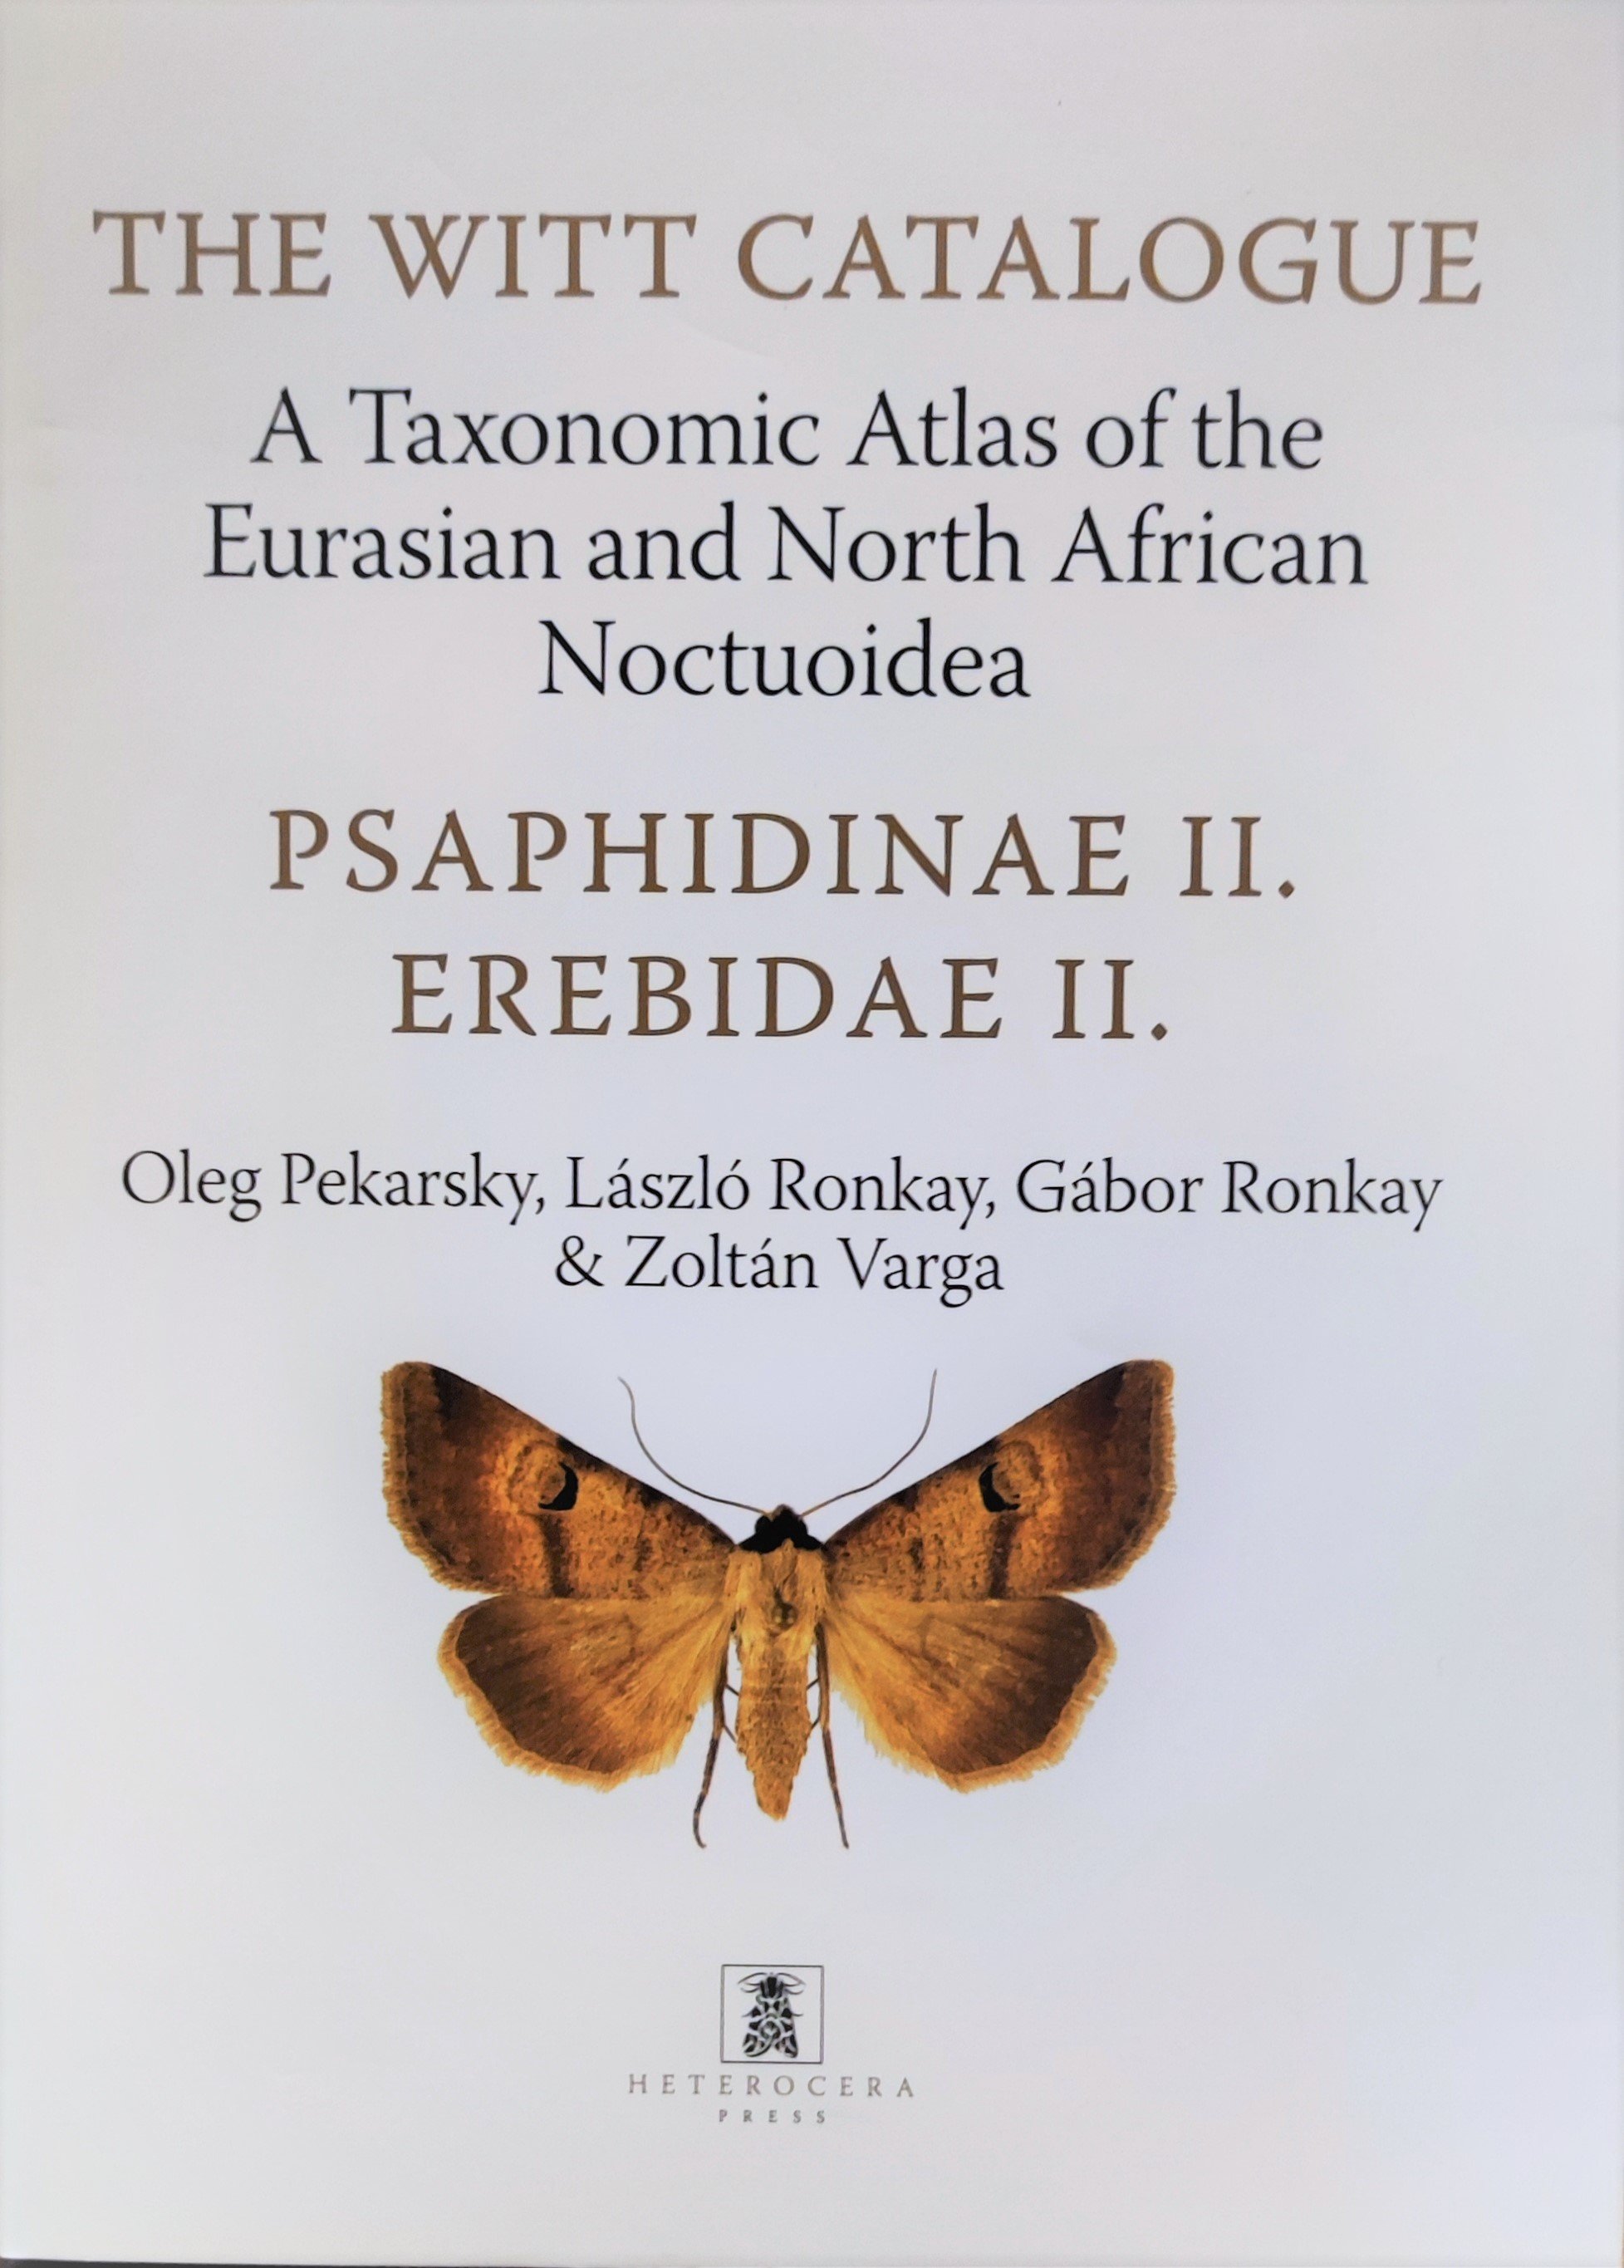 The Witt Catalogue: A Taxonomic Atlas of the Eurasian and North African Noctuoidea. volume 10. - Psaphidinae 2. – Erebidae 2. (Rippl-Rónai Múzeum CC BY-NC-ND)